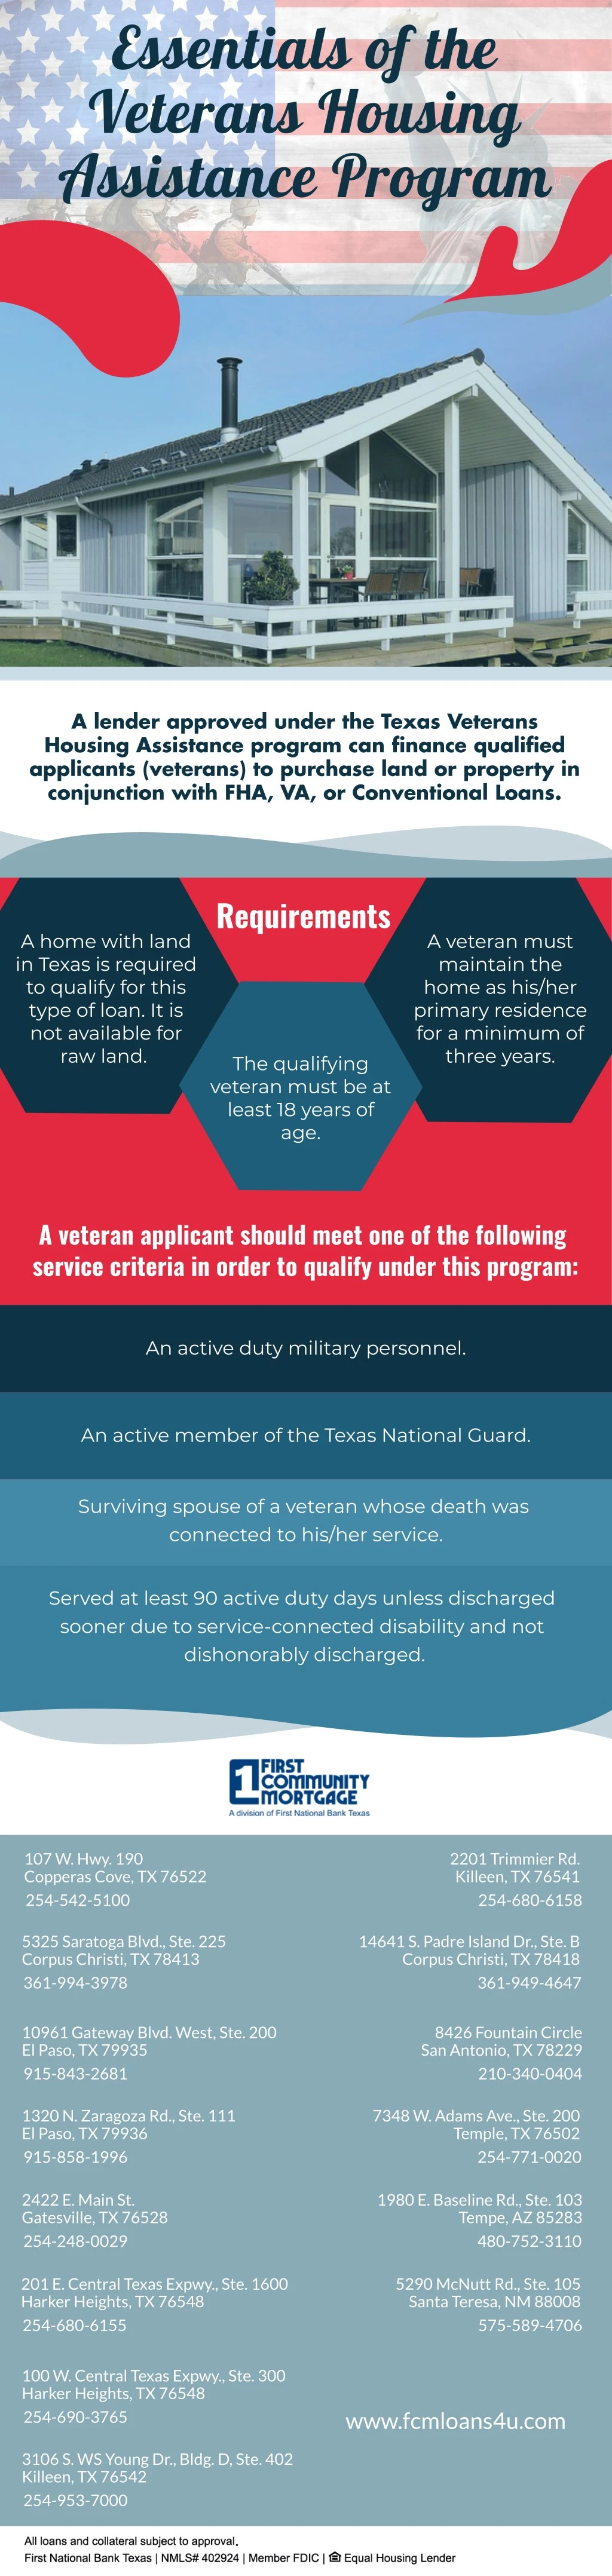 essentials of the veterans housing assistance